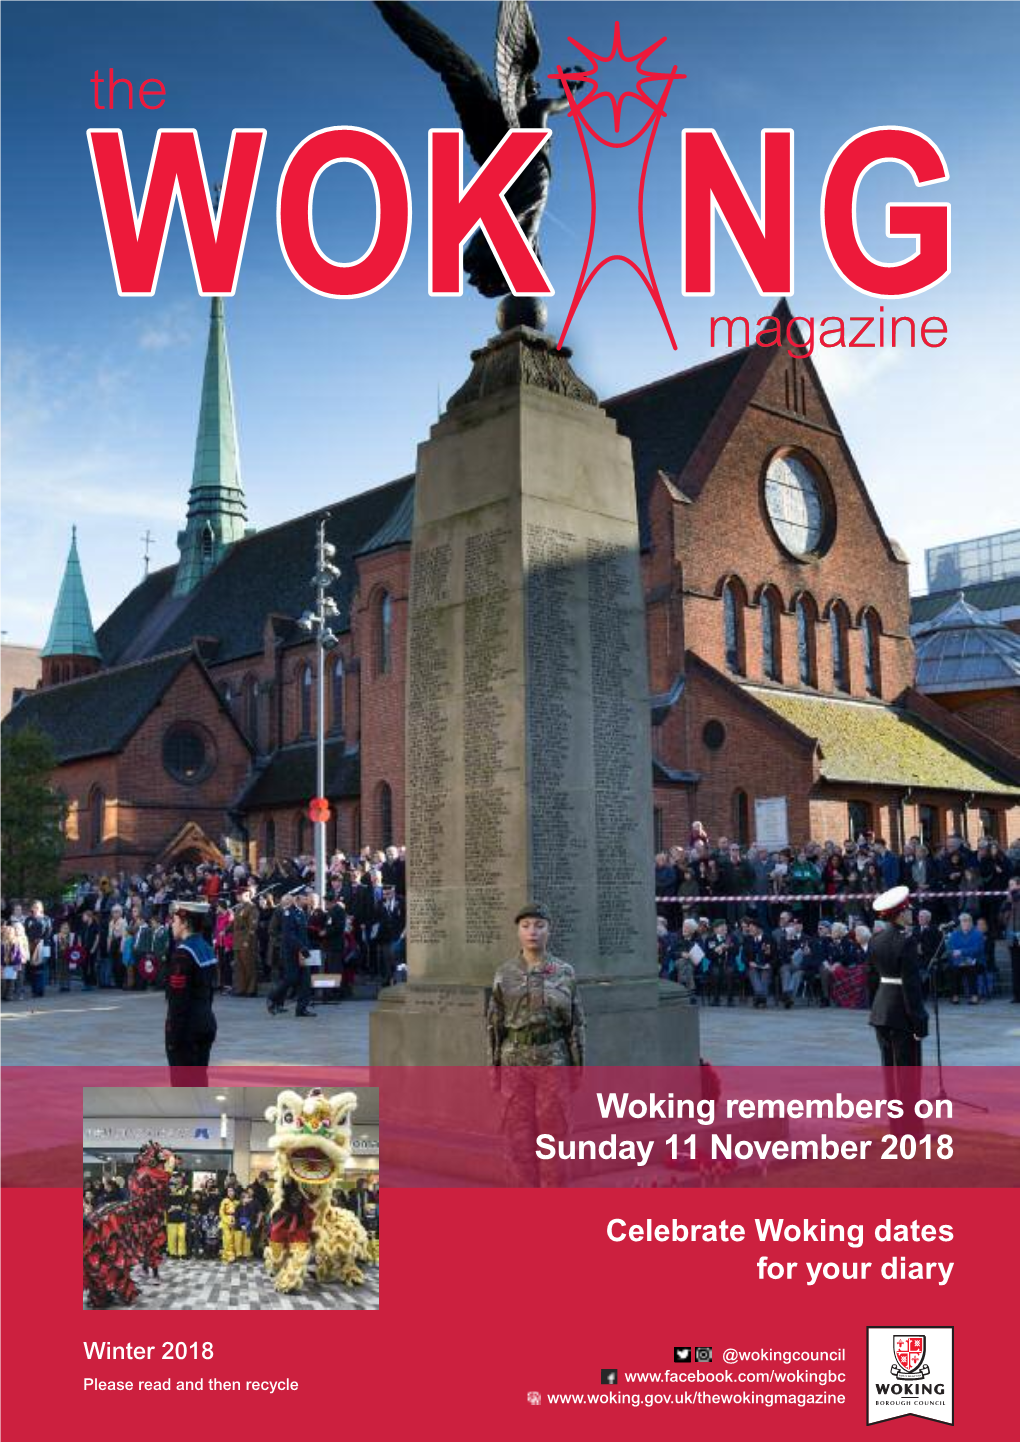 Woking Remembers on Sunday 11 November 2018